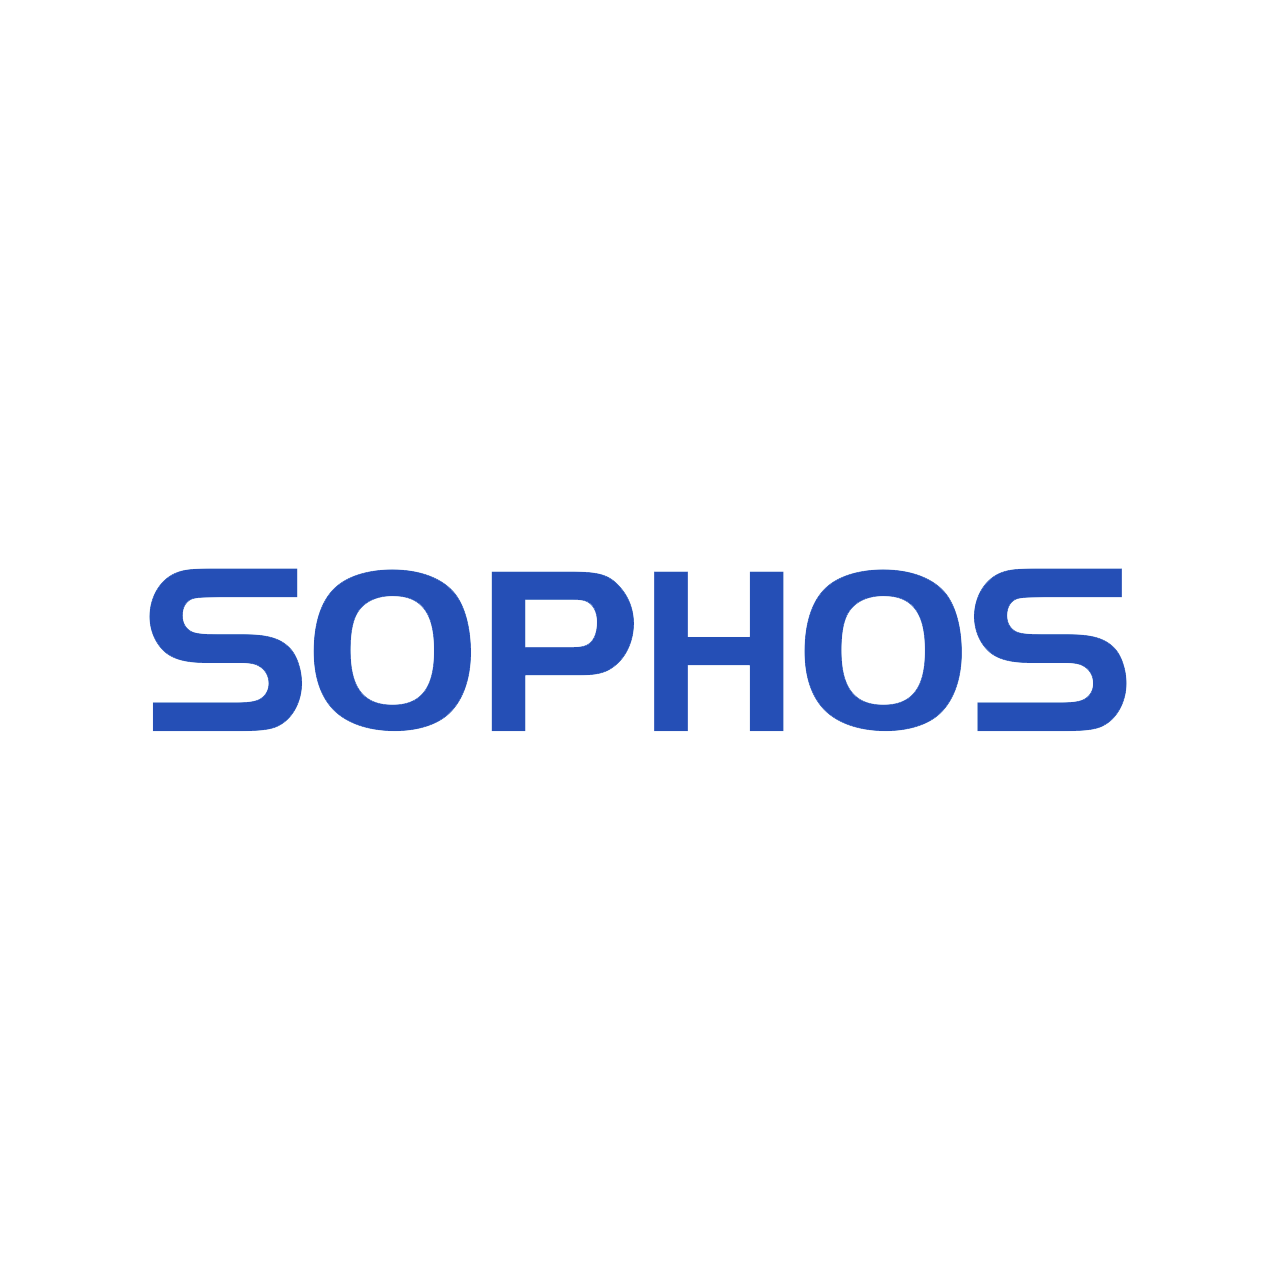 Sophos-ATC-LogoSQ